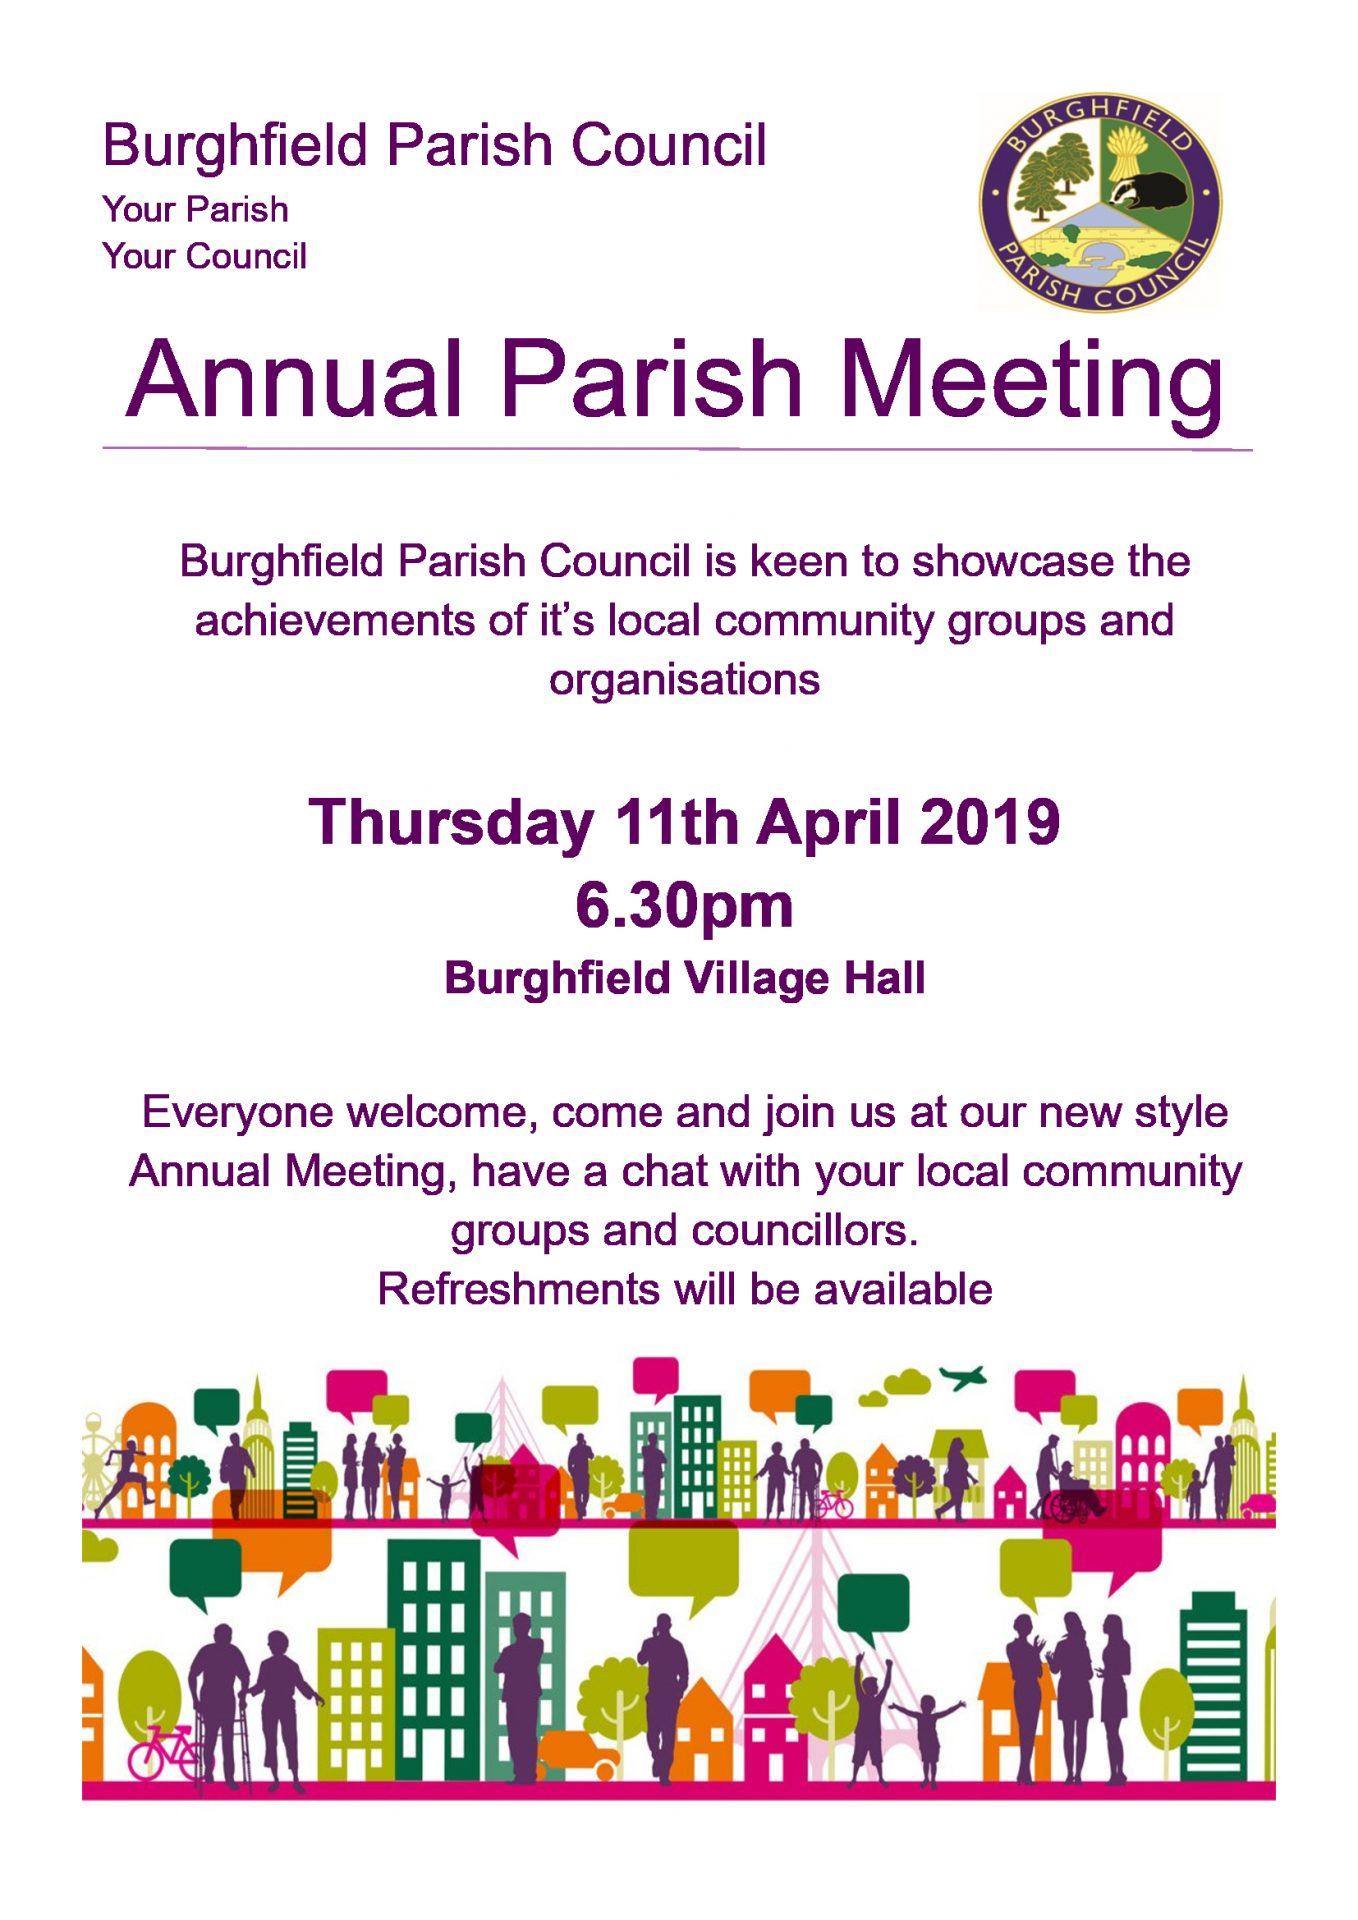 https://burghfieldparishcouncil.gov.uk/wp-content/uploads/2019/04/Parish-Council-Annual-Meeting-Poster-1-1.jpg